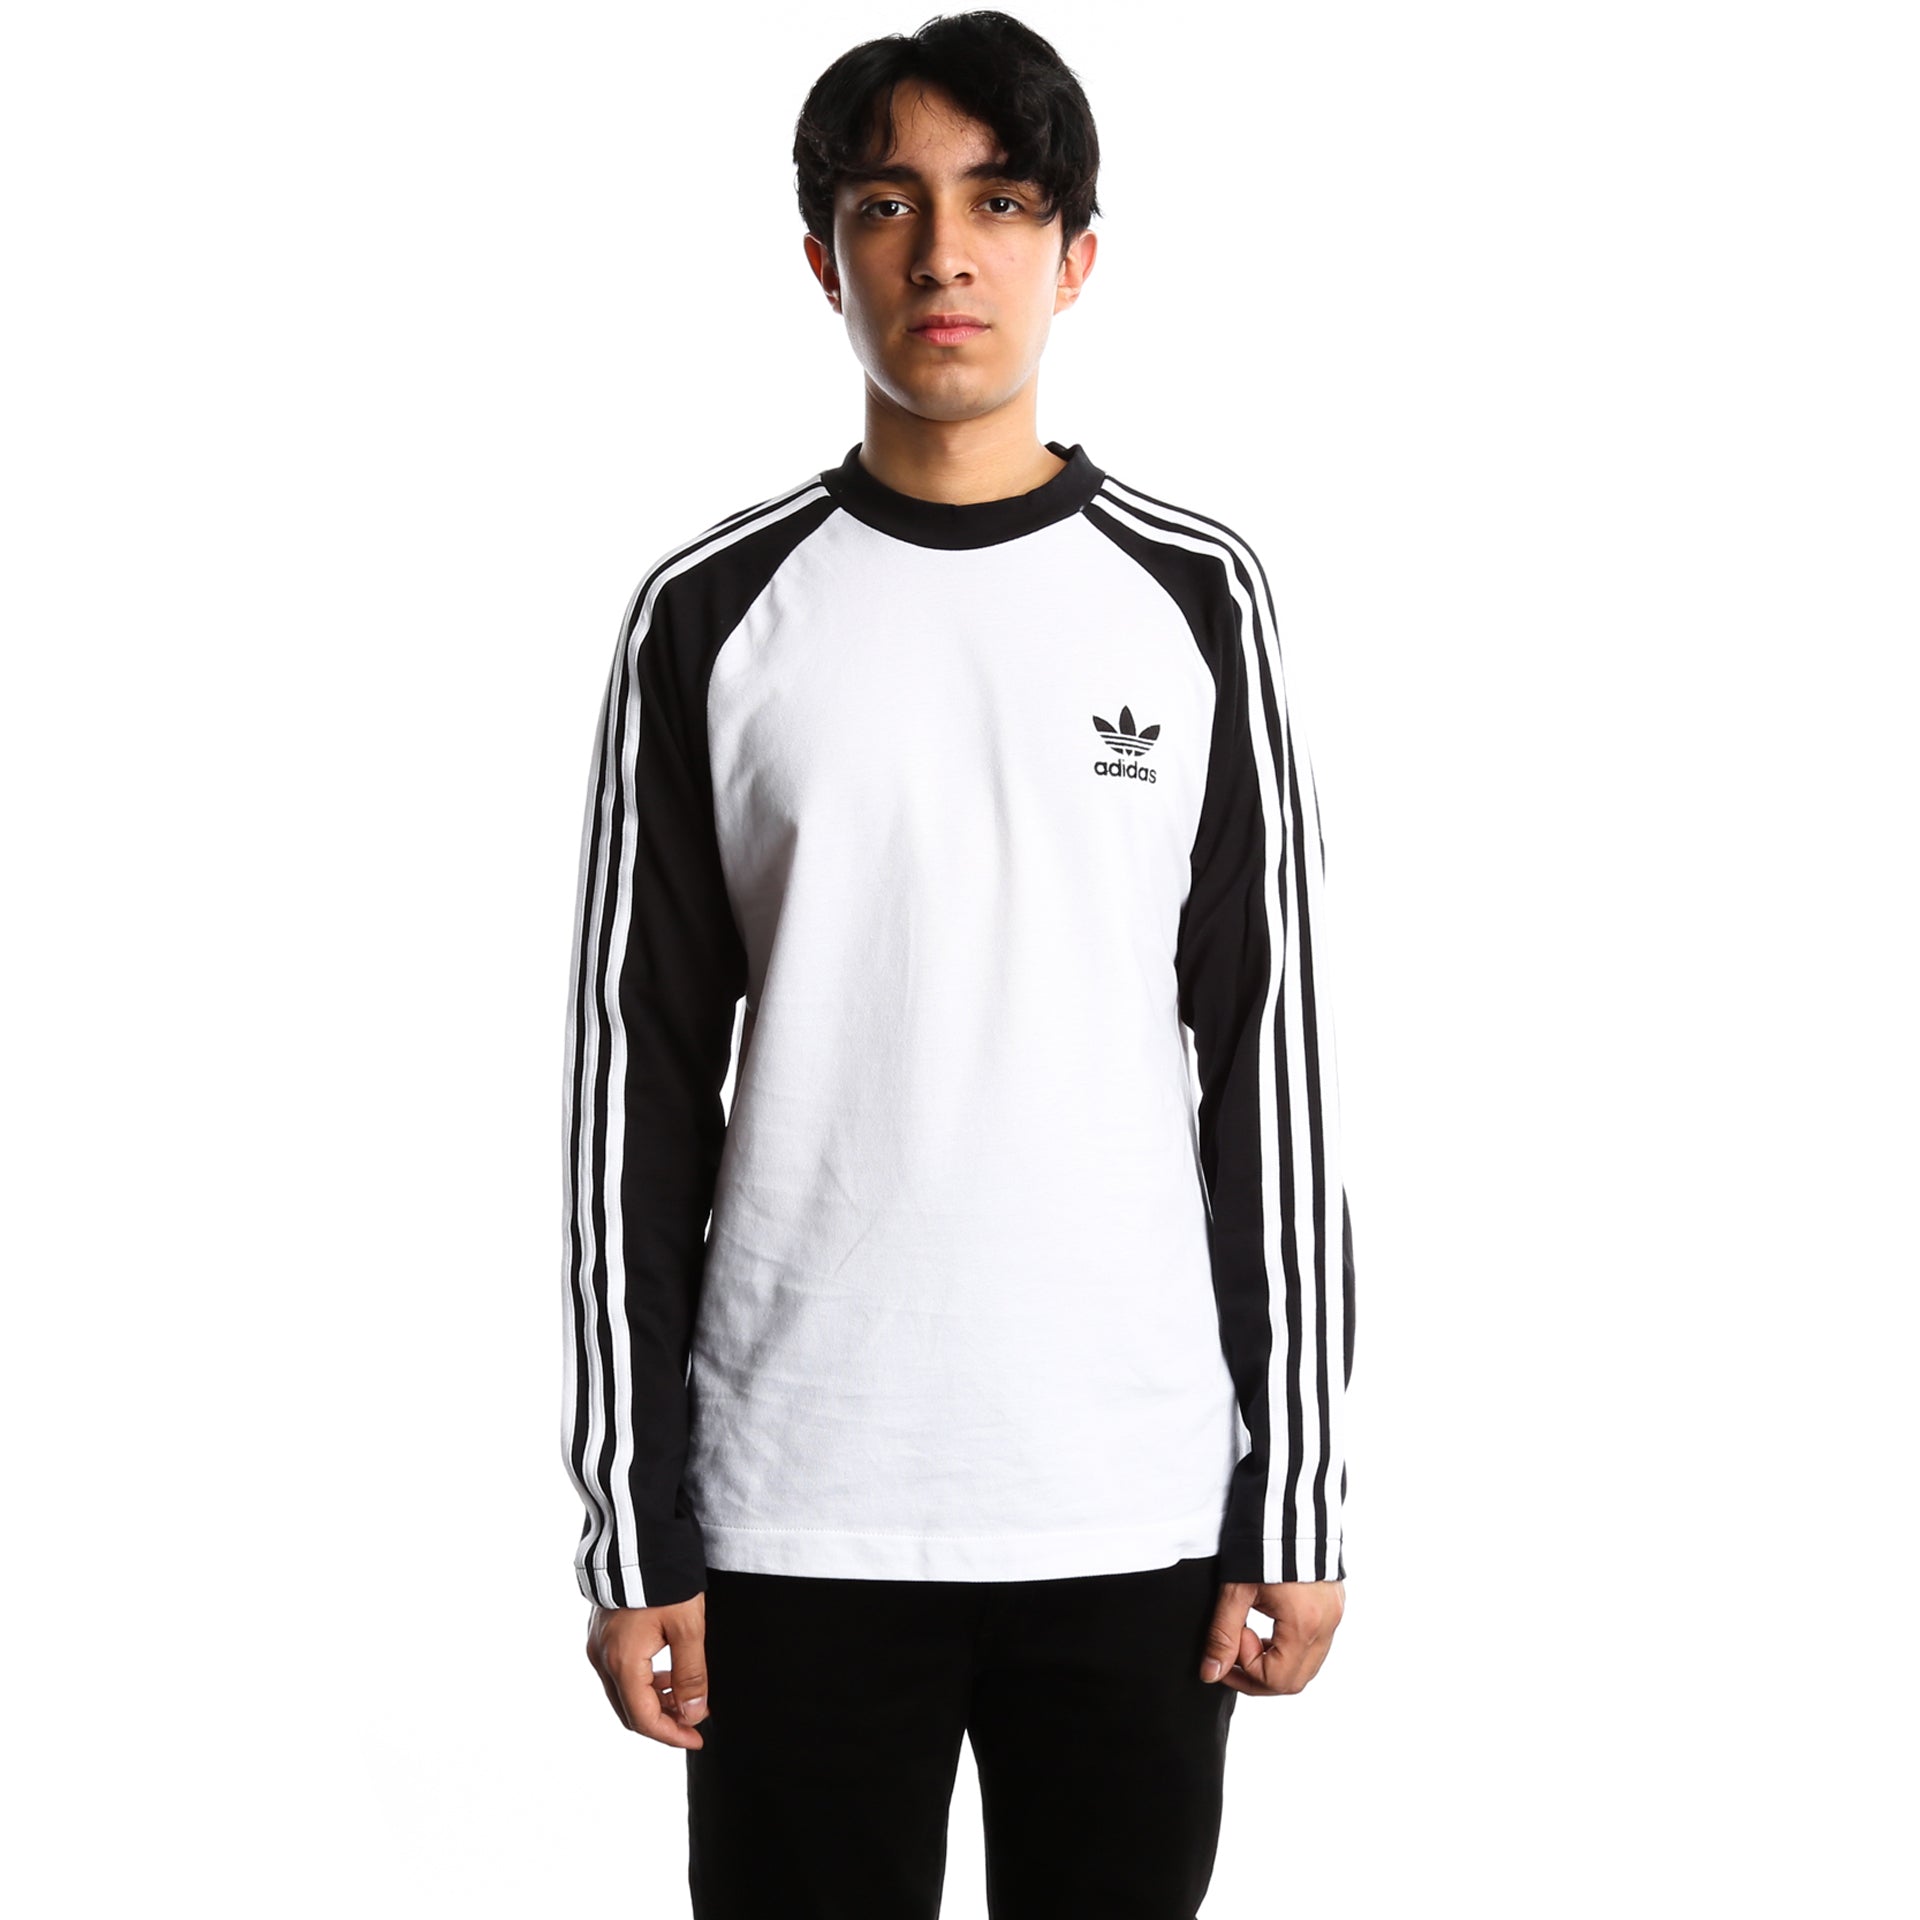 Adidas Long T-Shirt Black/White - New Star